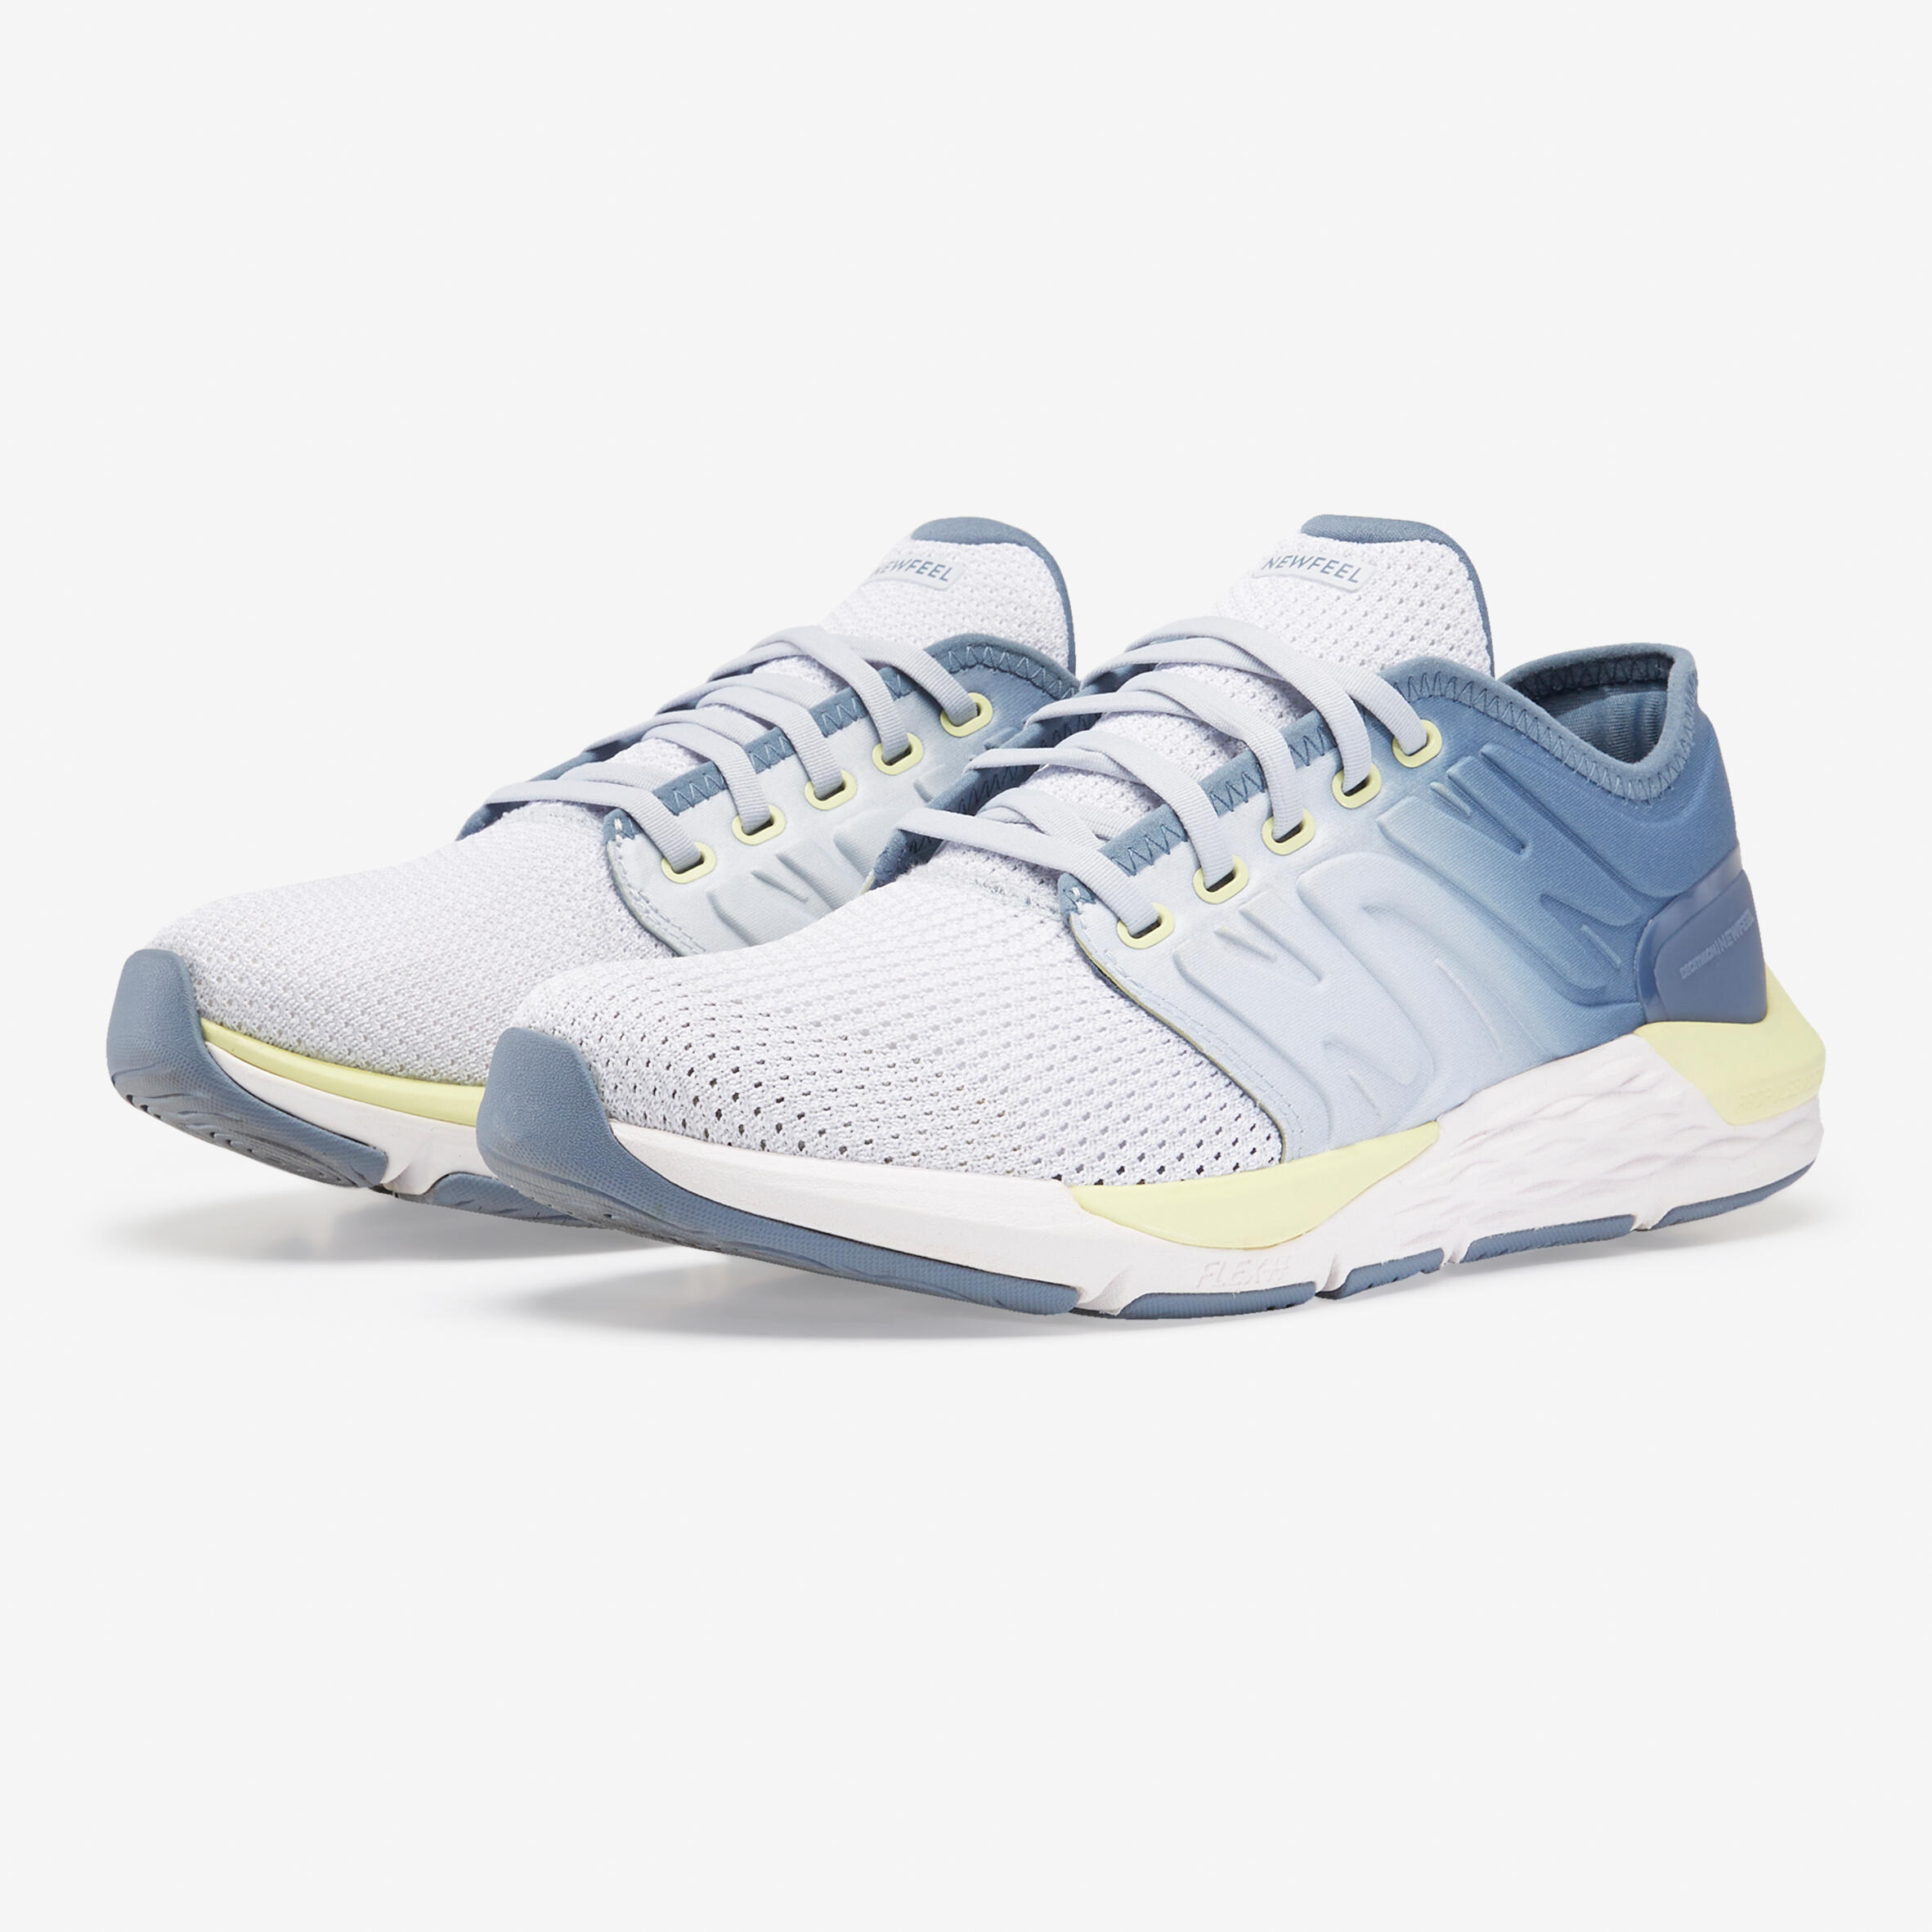 Fitness Walking Shoes Sportwalk Comfort - blue/grey 5/7